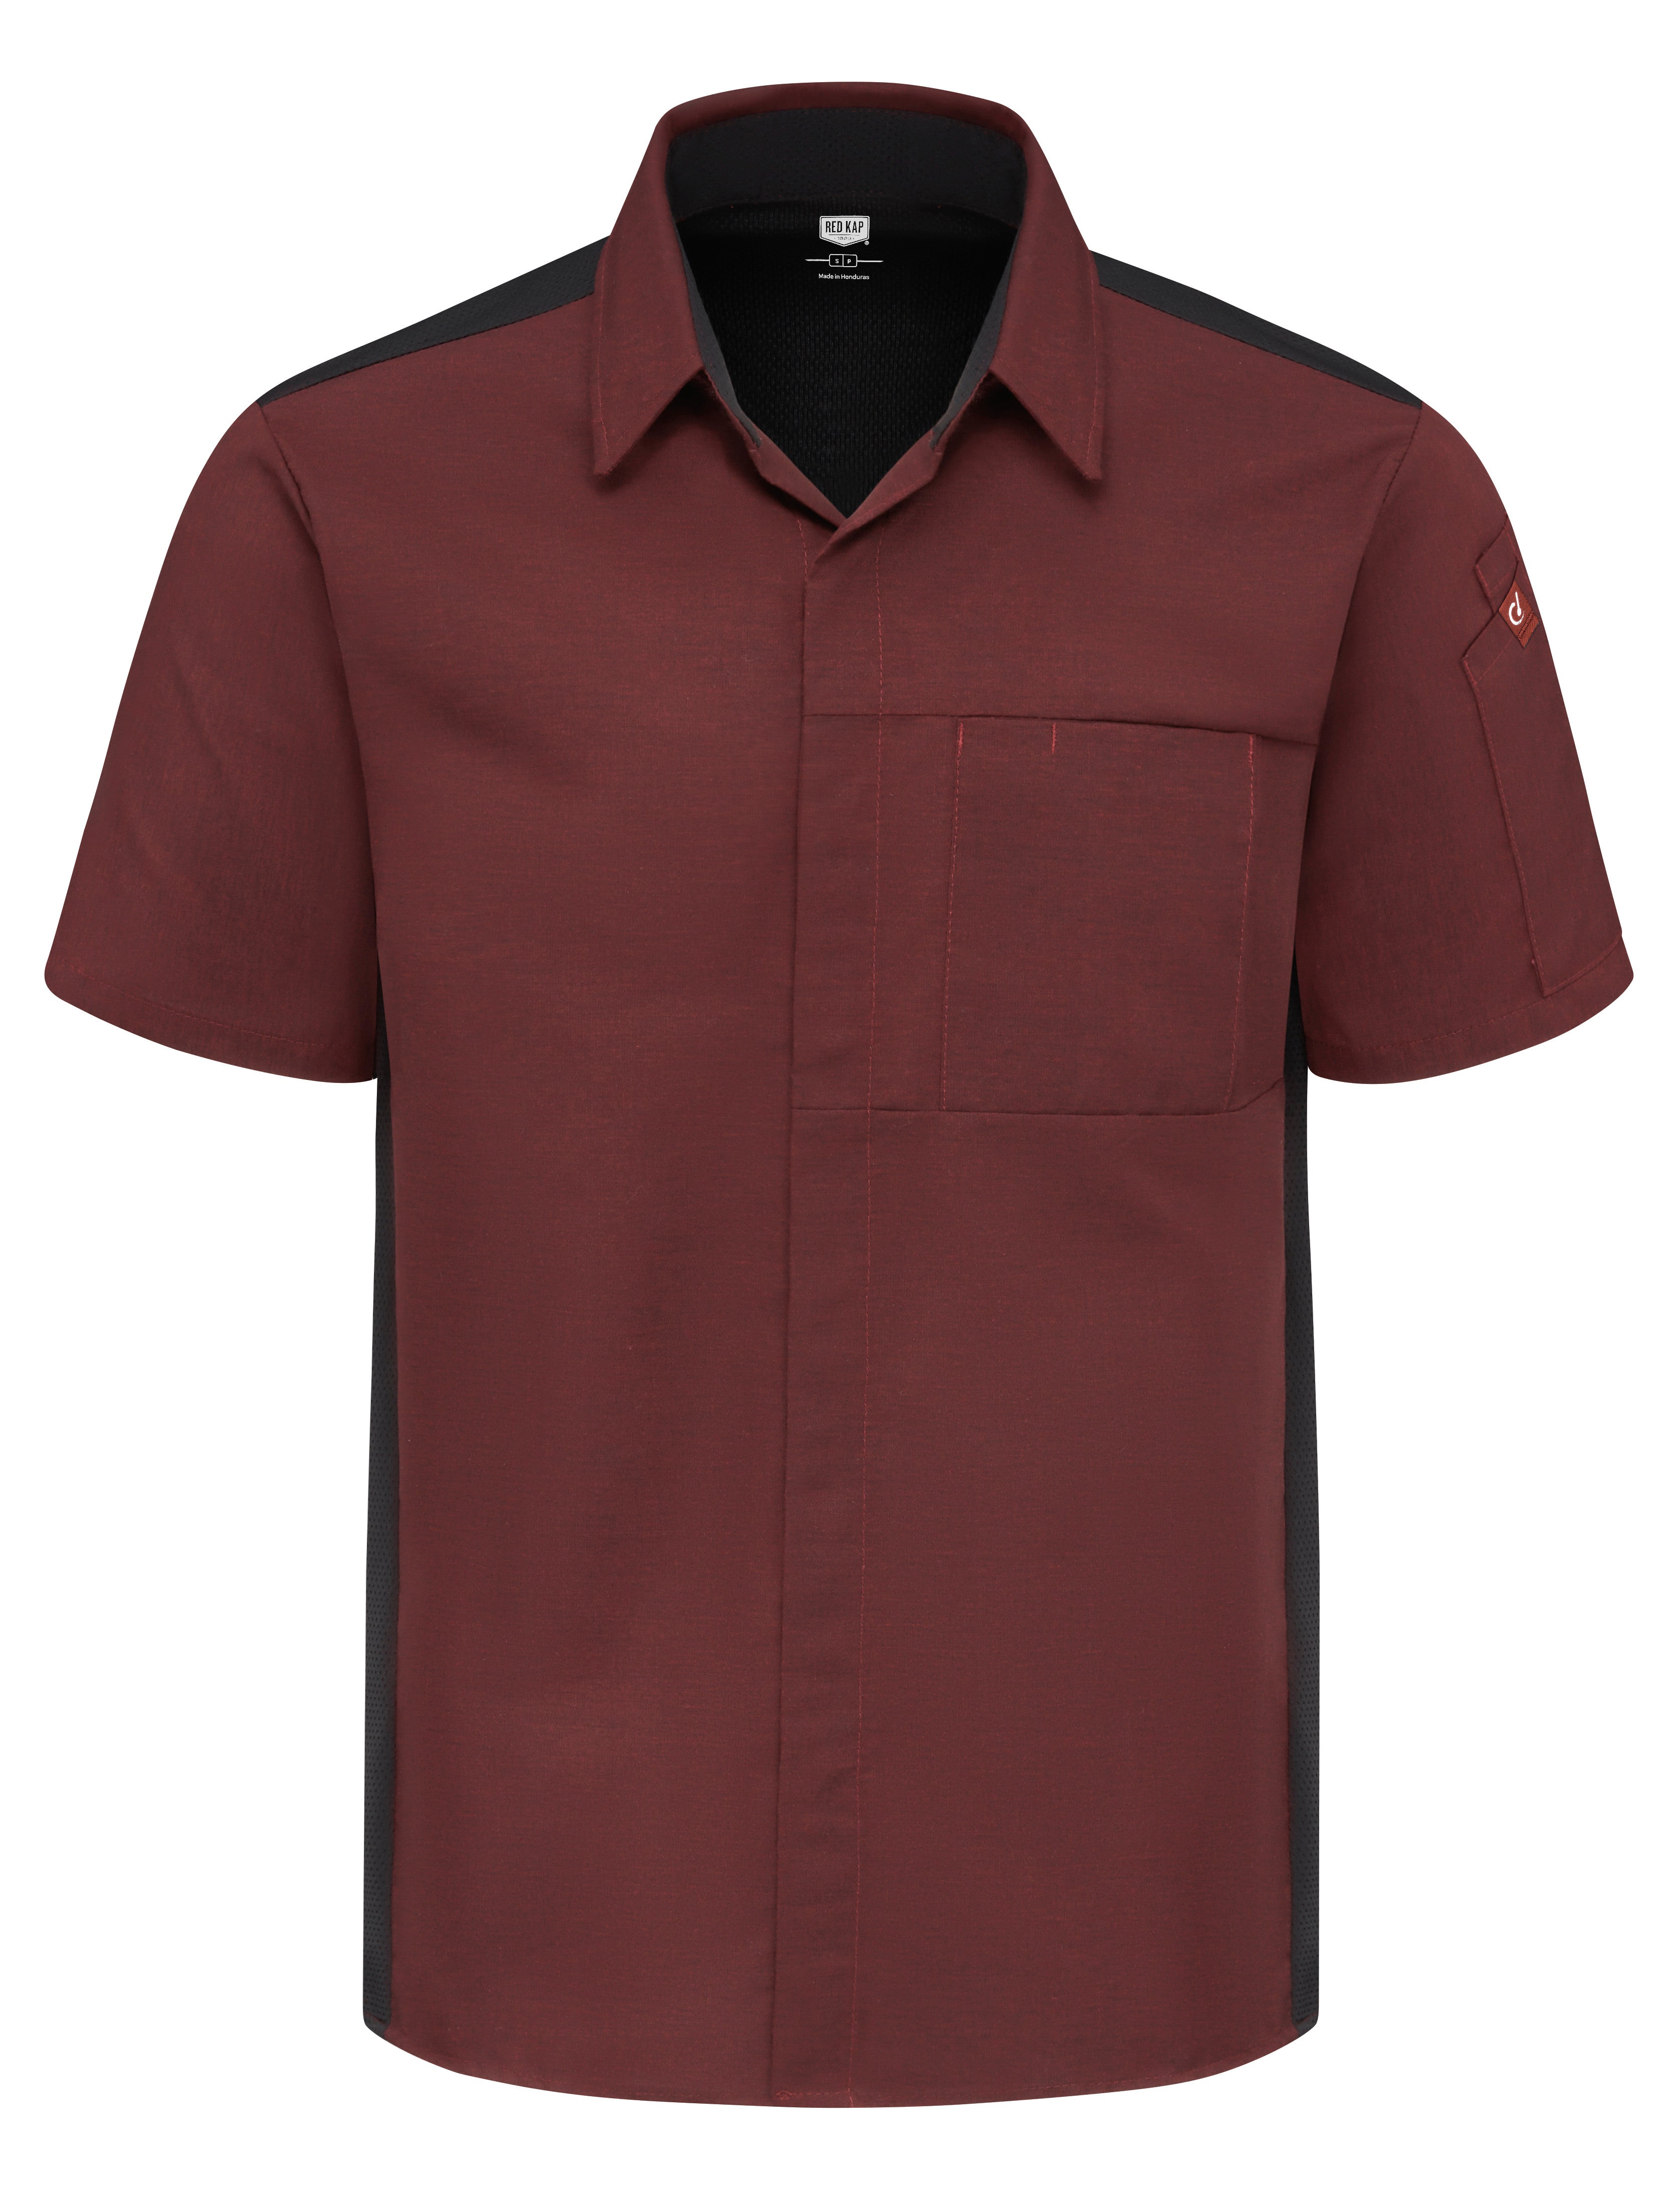 Men's Airflow Cook Shirt with OilBlok 502M - Merlot Heather with Black Mesh-eSafety Supplies, Inc